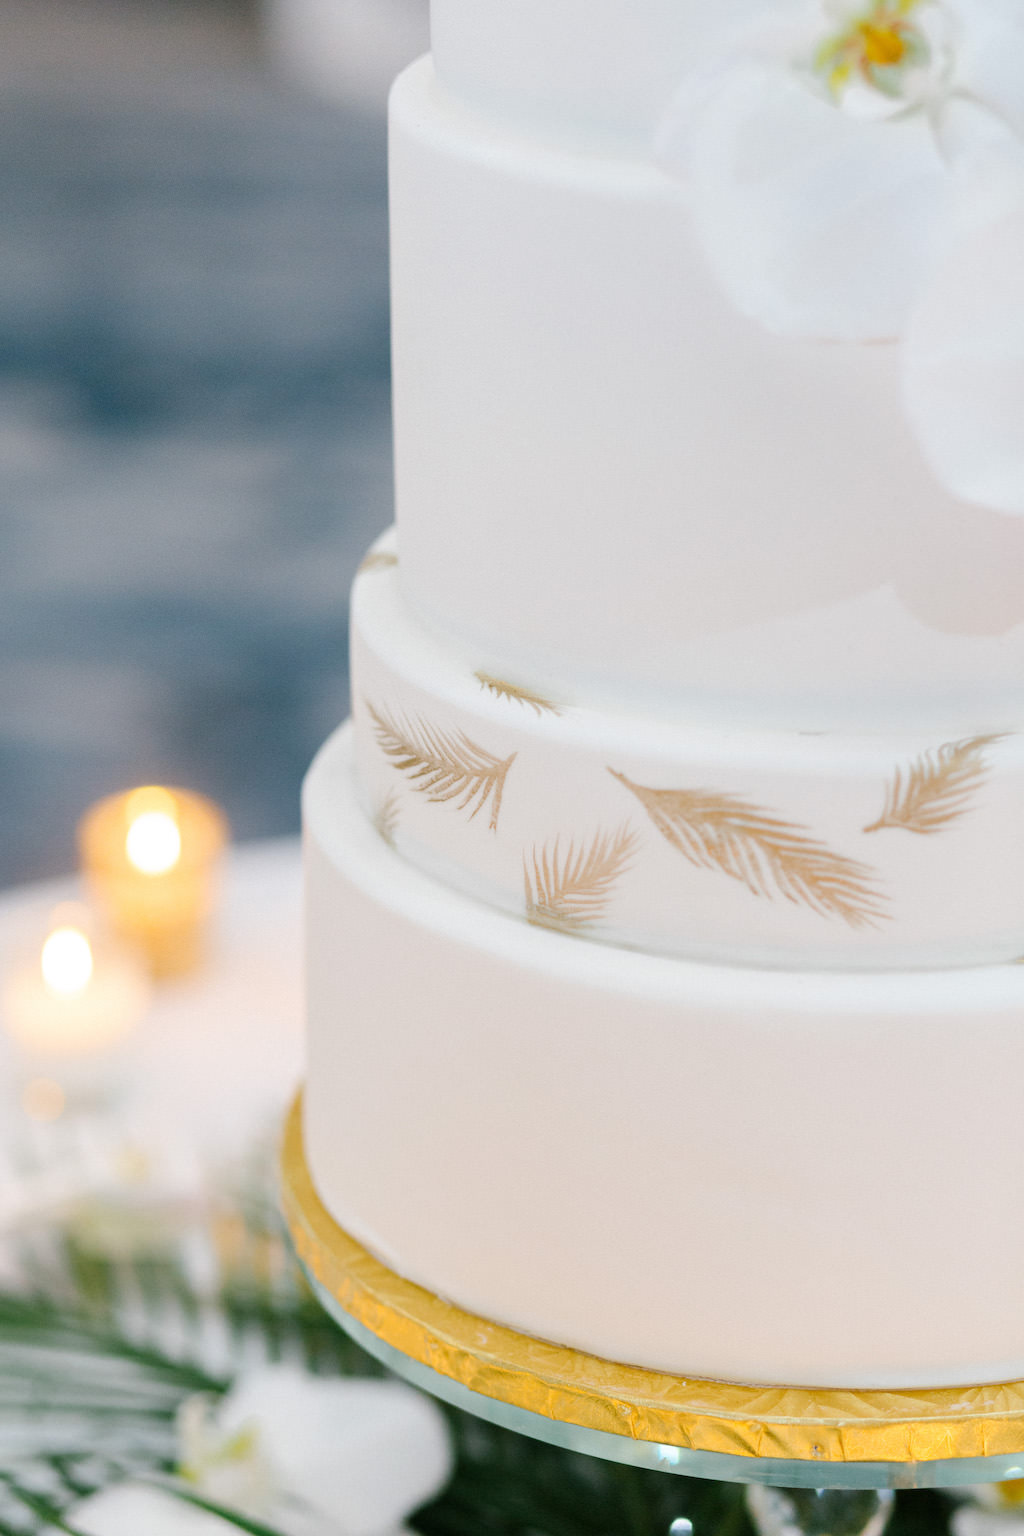 Elegant Modern Classic Wedding Cake White and Gold Foil Stamped Palm Leaf Detailing on White Wedding Cake | Tampa Bay Wedding Baker The Artistic Whisk